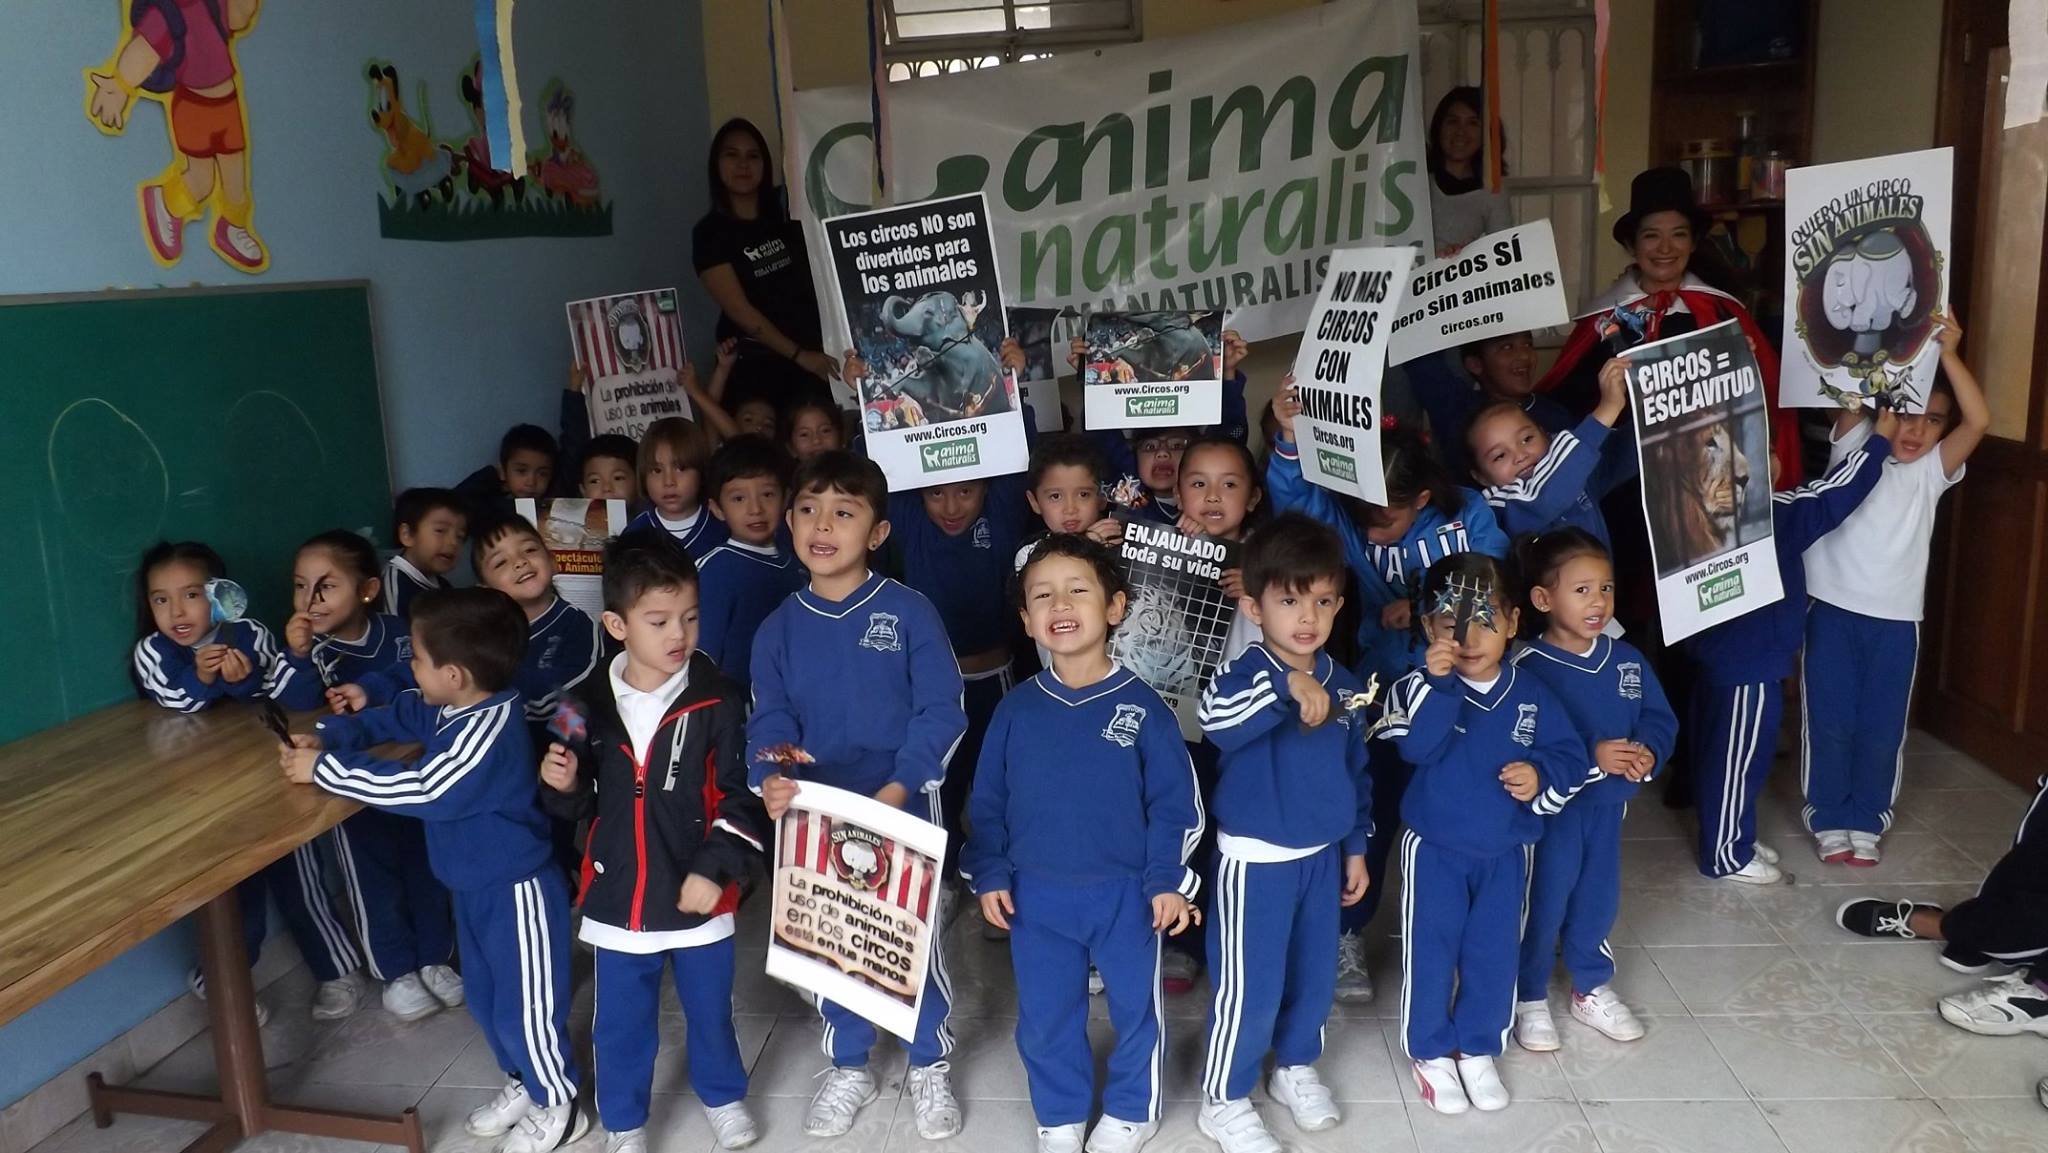 Llevamos a cabo taller infantil sobre circos sin animales en Morelia